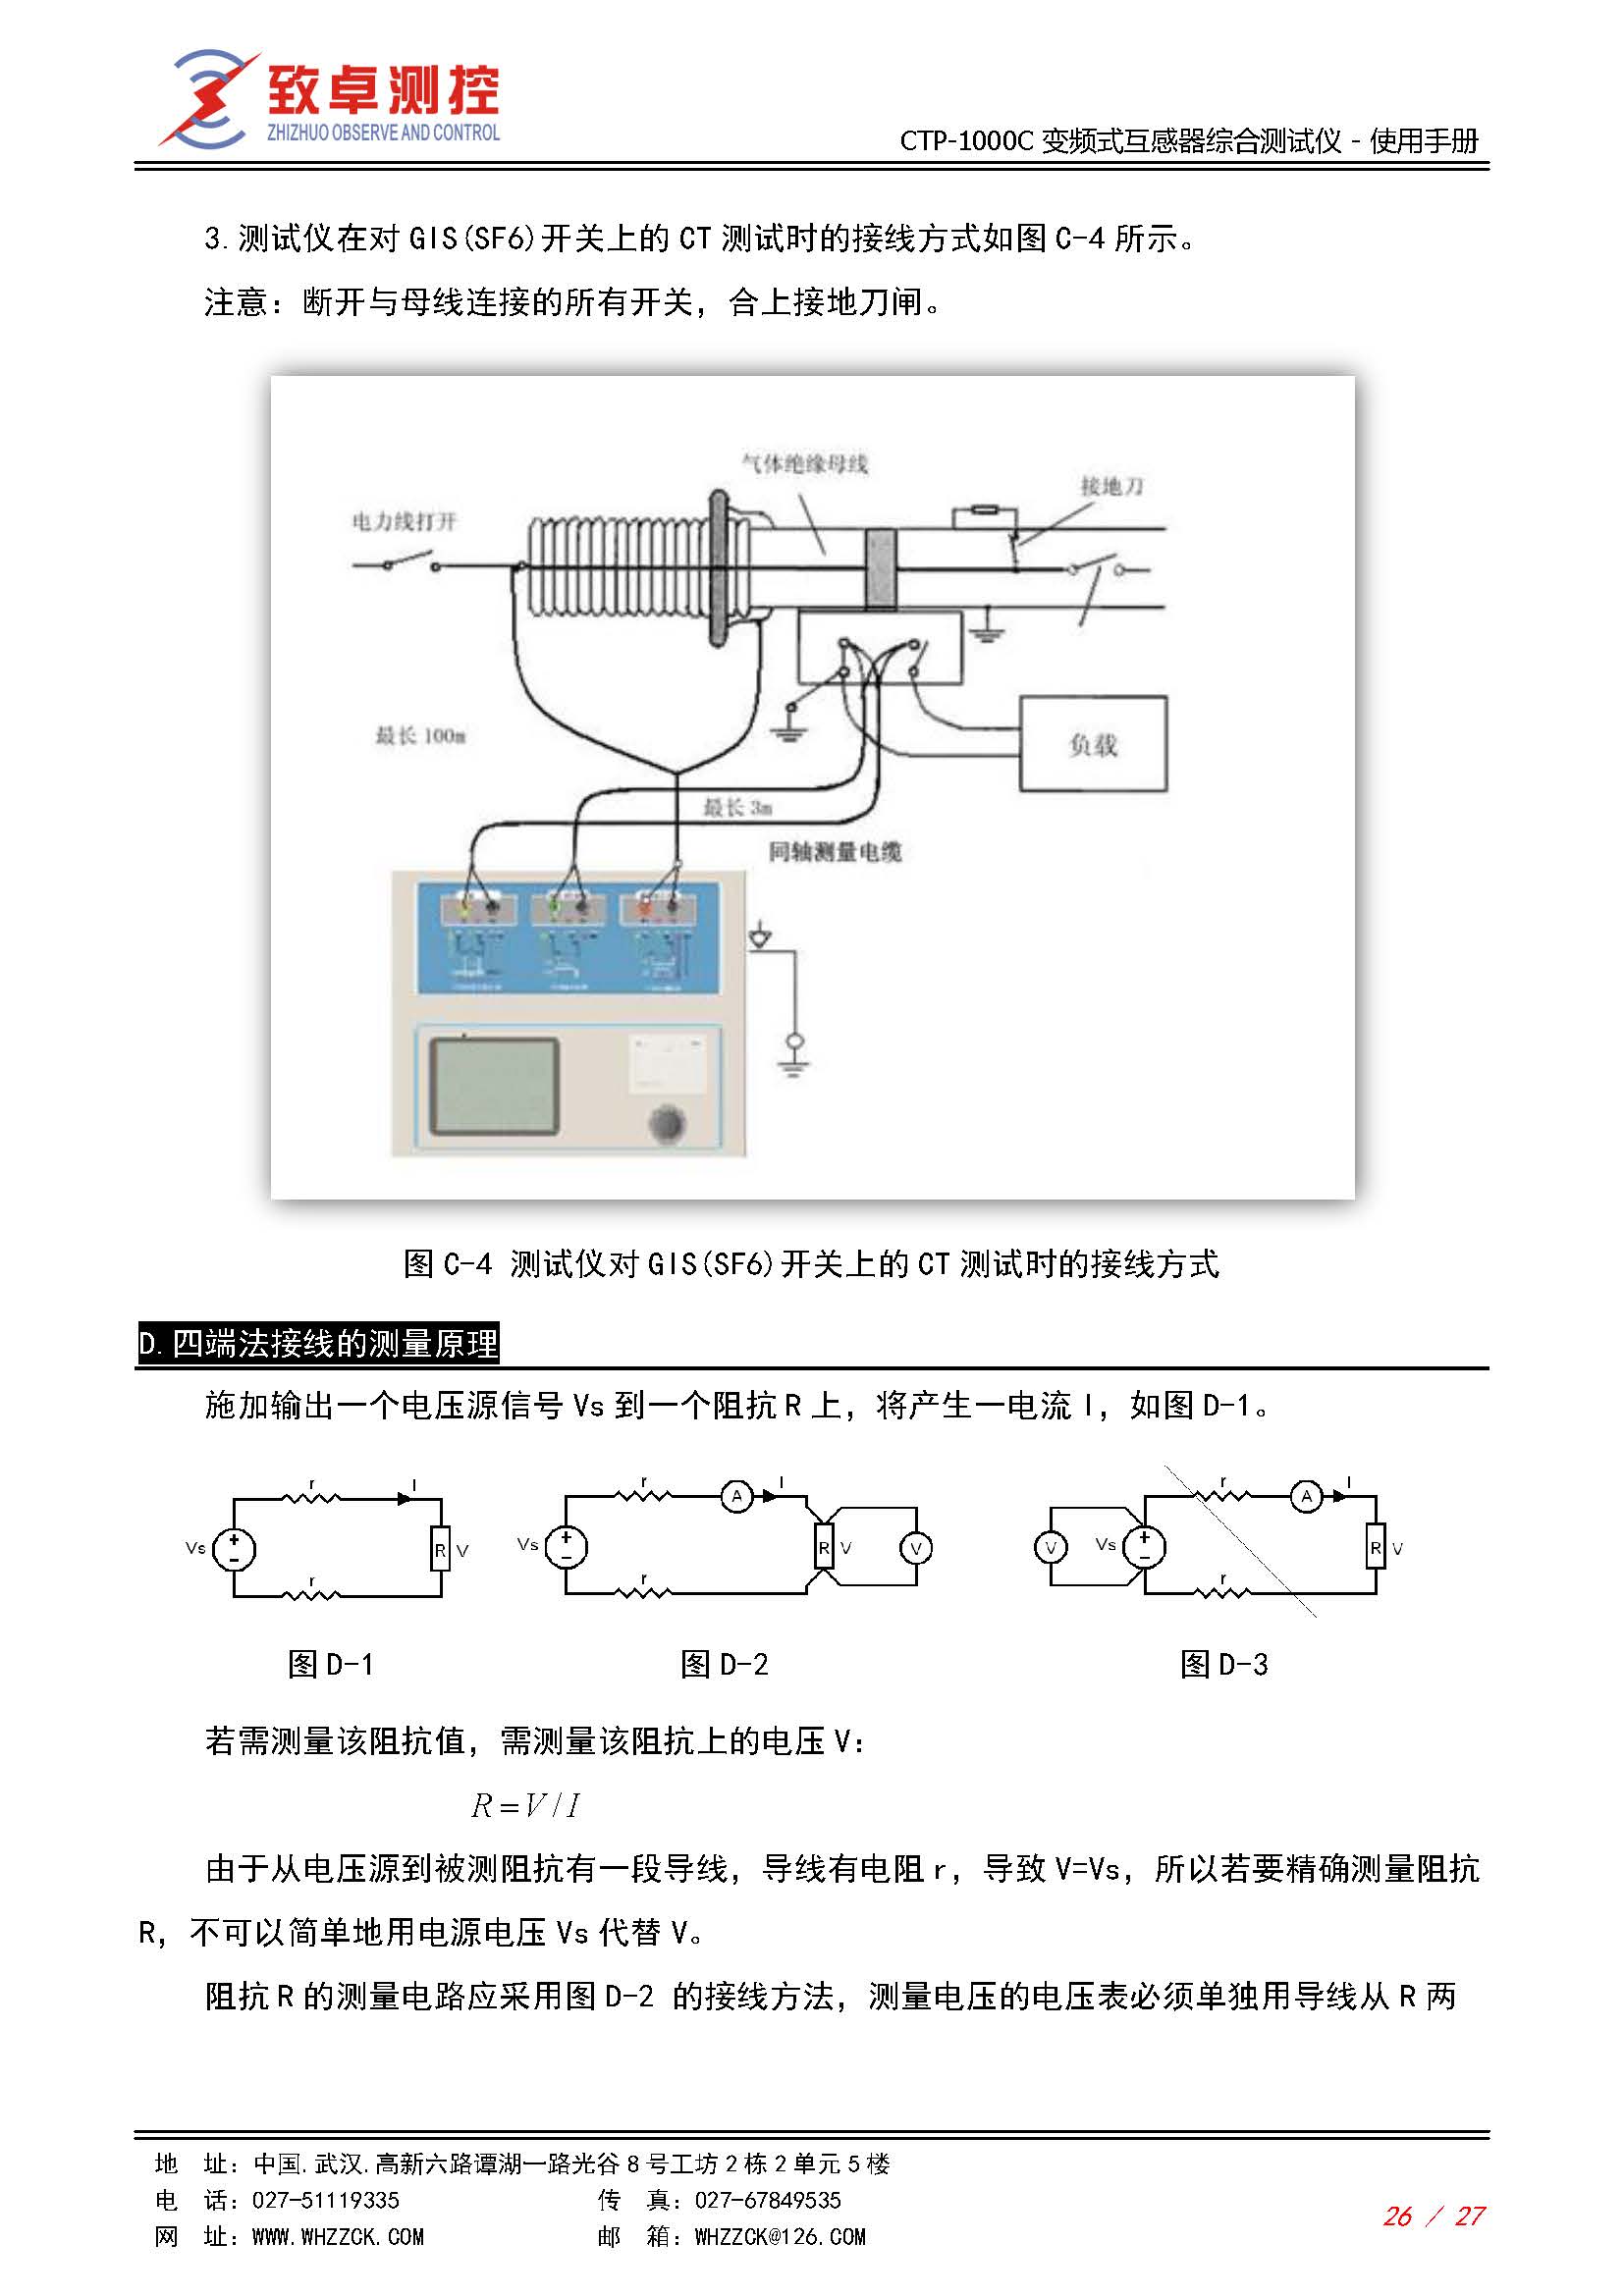 CTP-1000C 变频式互感器综合测试仪使用说明书(图26)